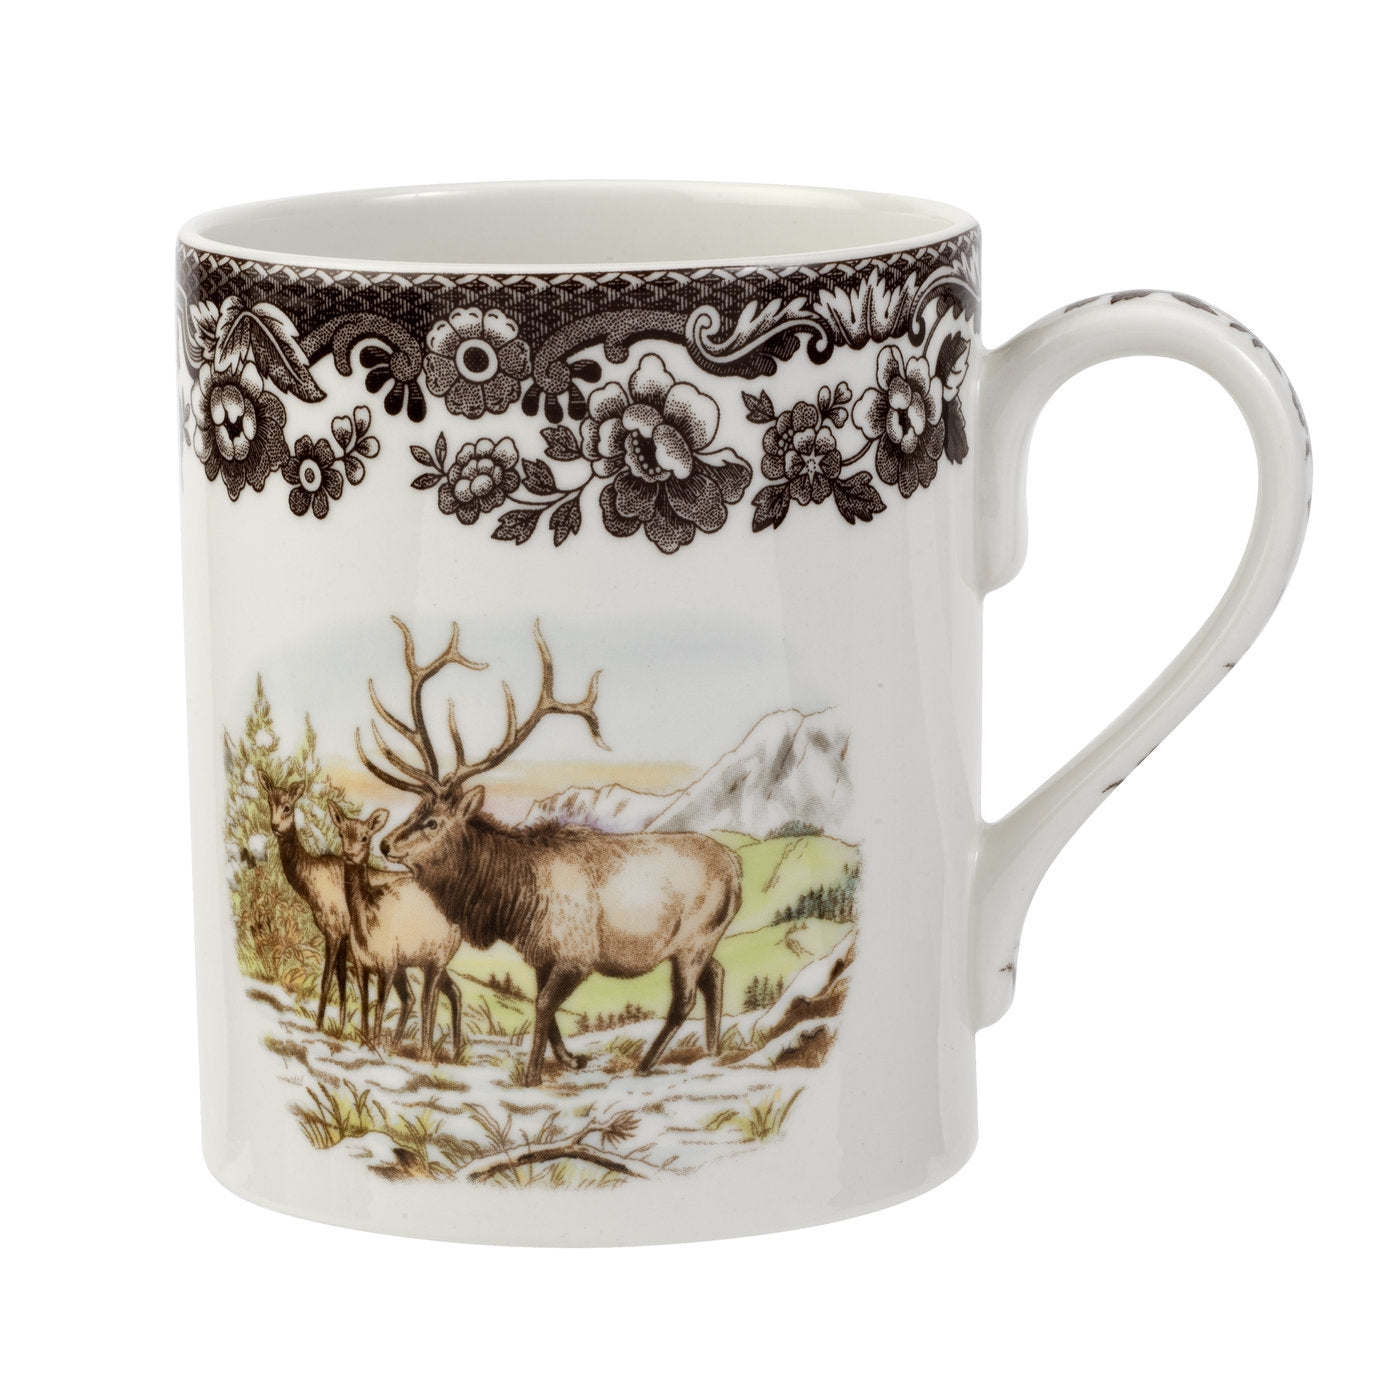 Spode Woodland Mug, Elk